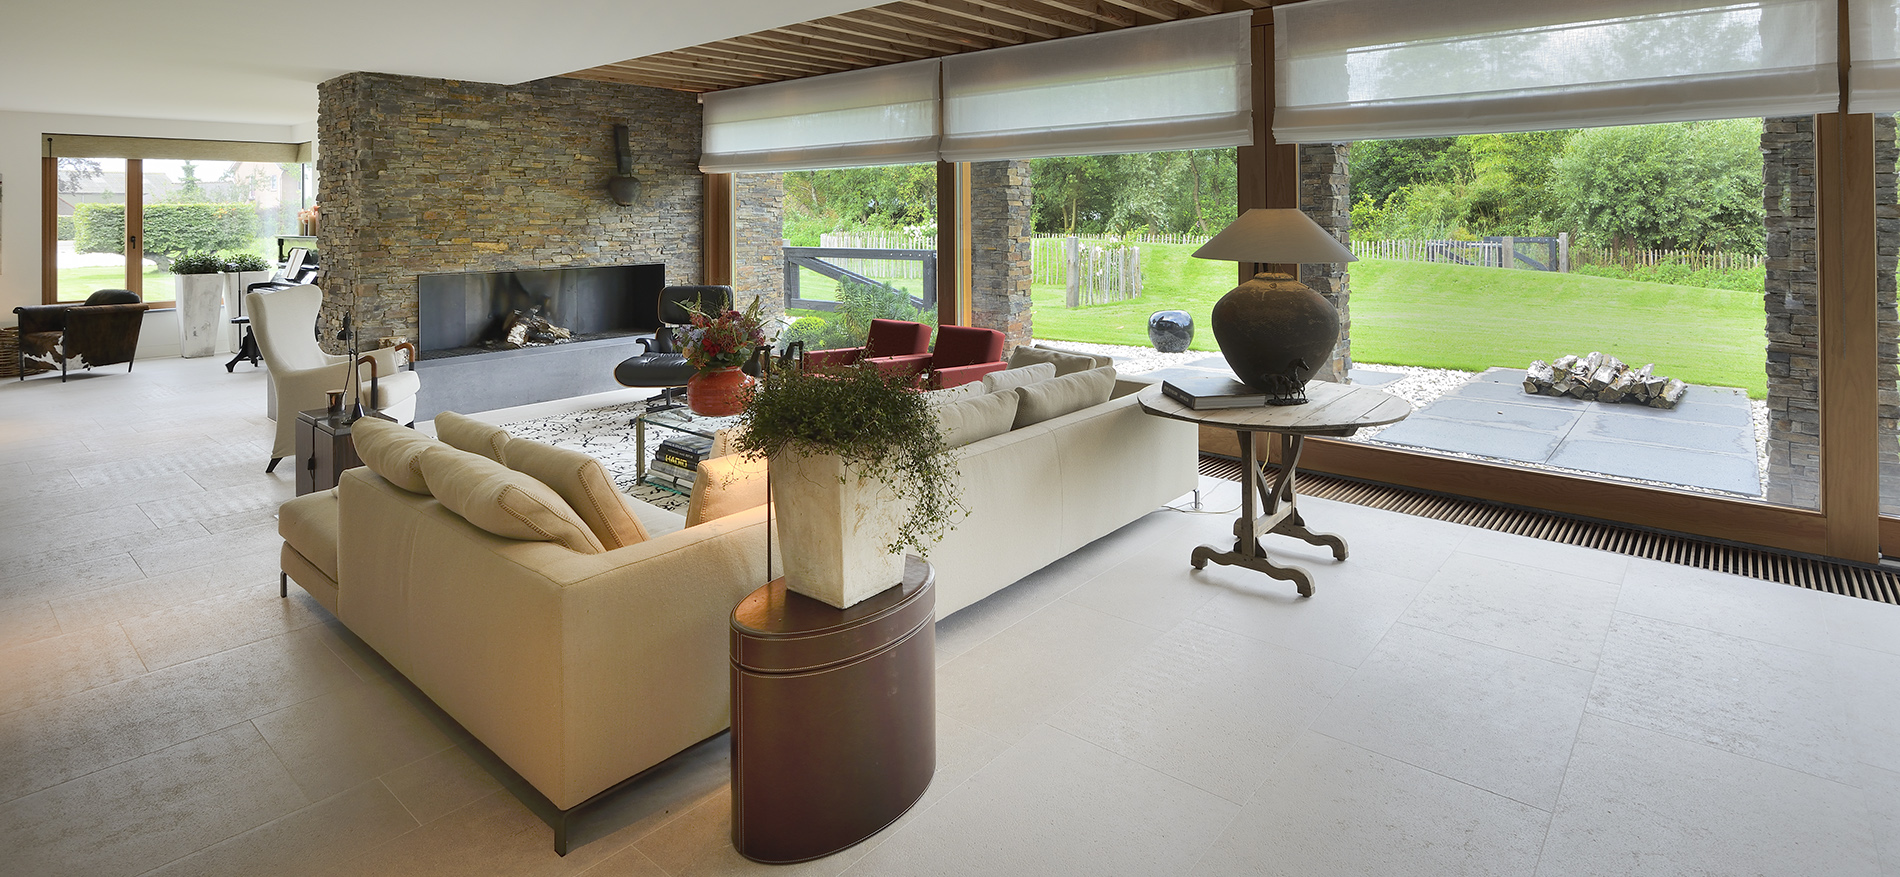 Design interior and exterior Villa - 